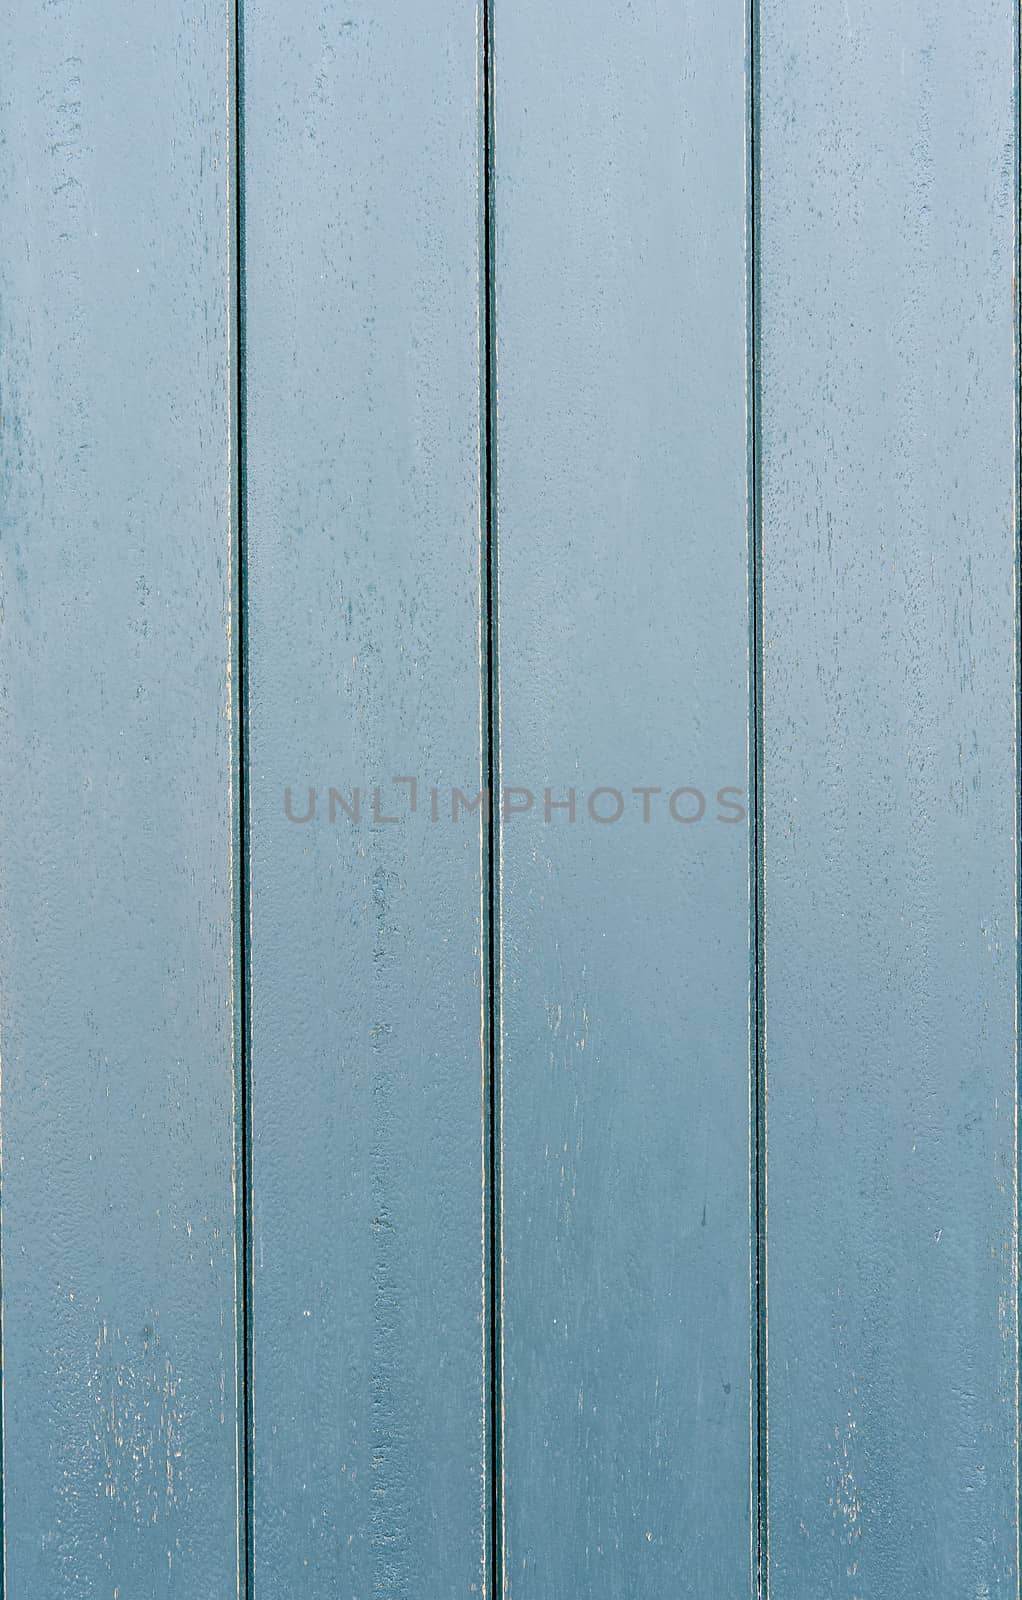 Old grunge blue wood panels used as background